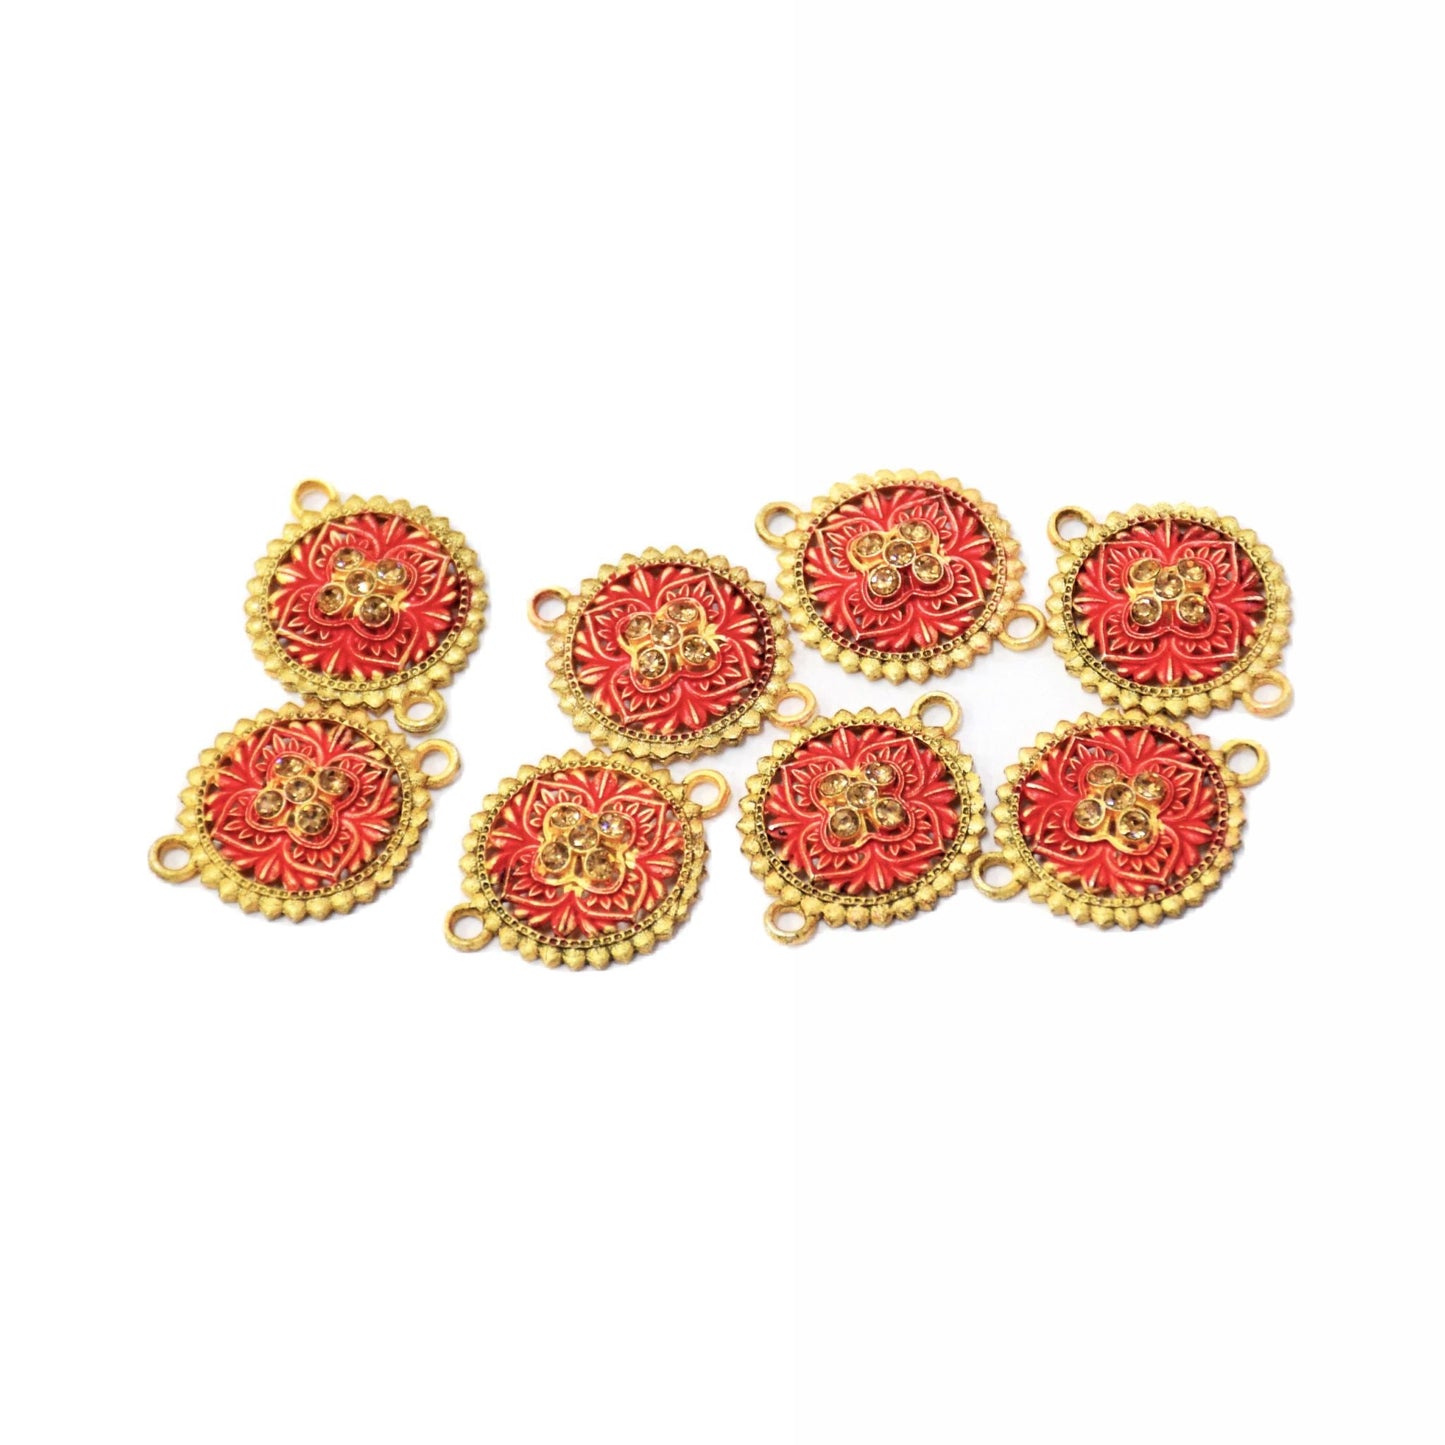 Indian Petals Enamel coated Beautiful Metal Traditional style Motif for Craft Decoration or Rakhi - 12501